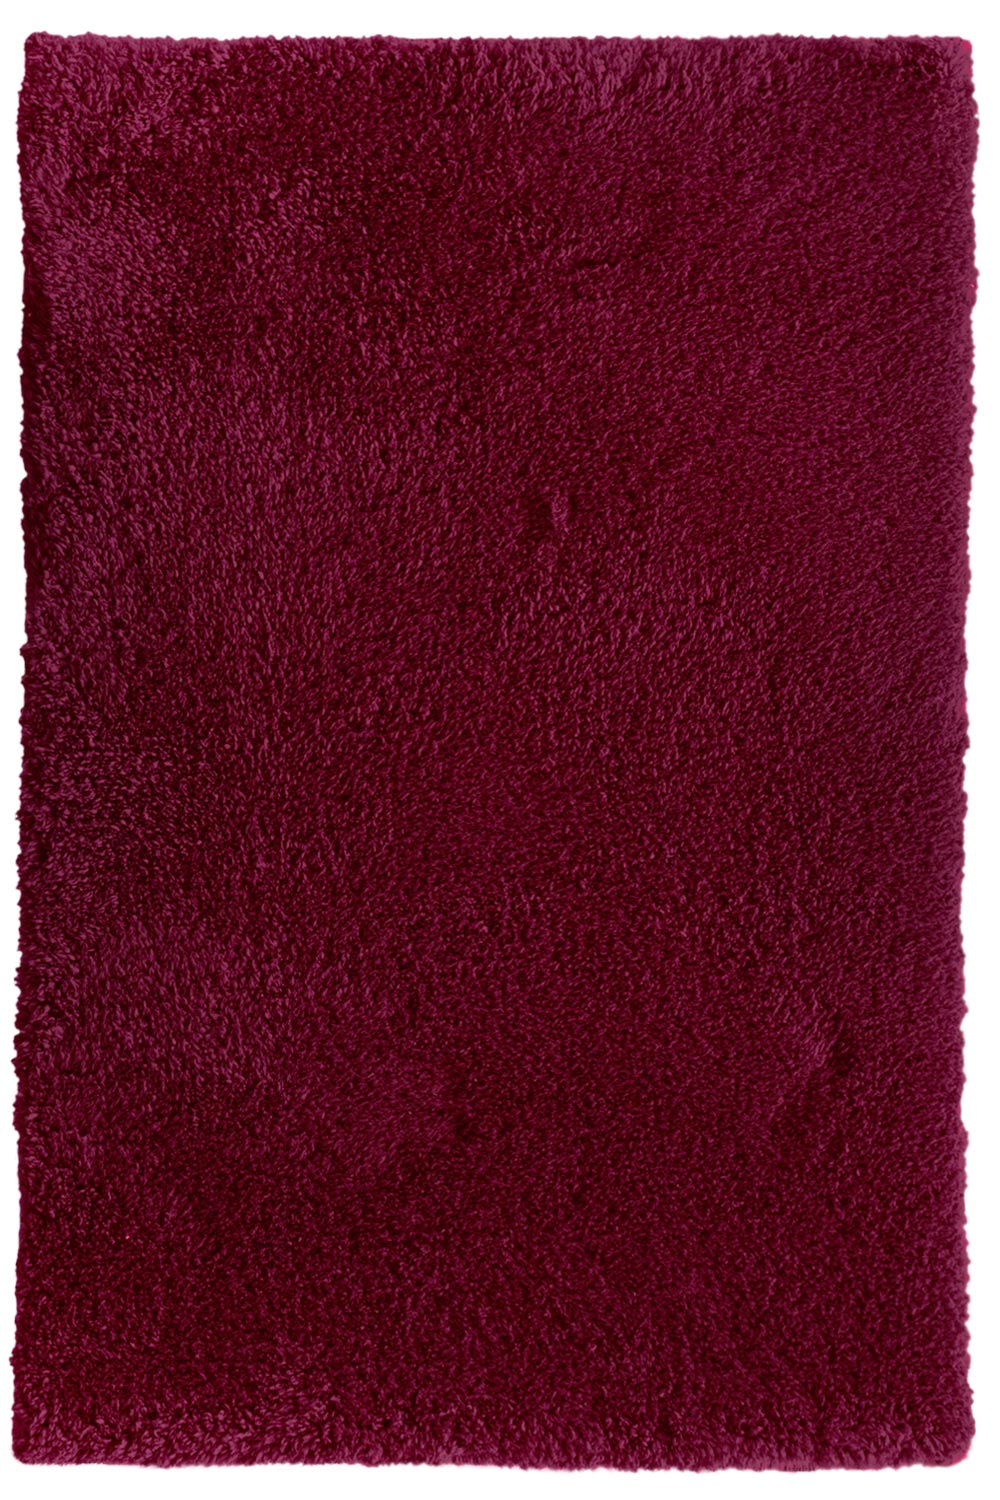 Kusový koberec SPRING turquise